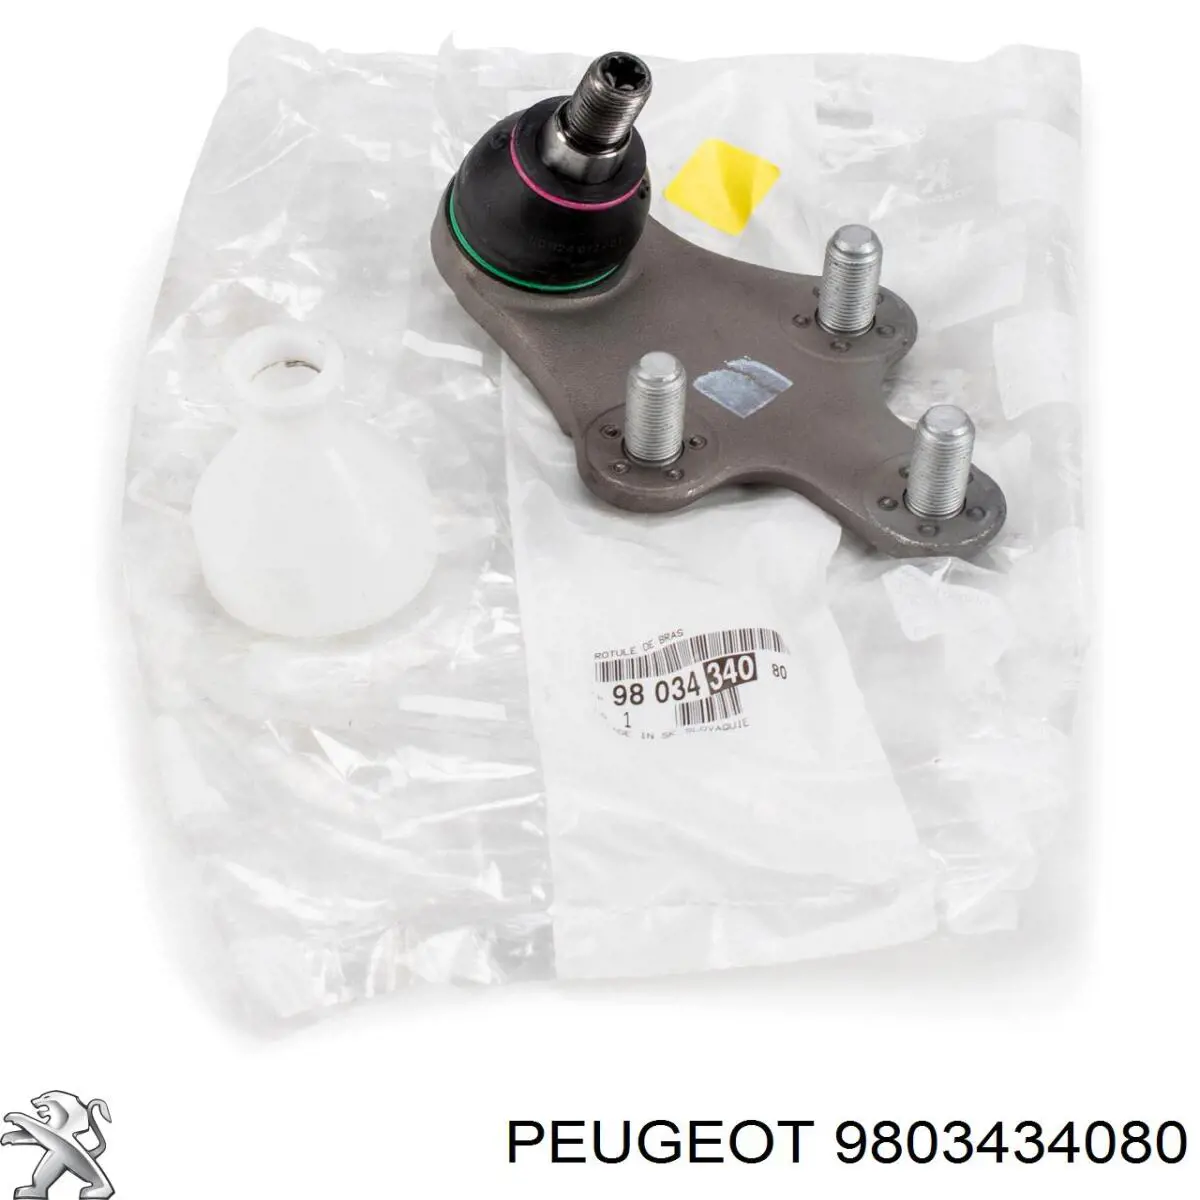 9803434080 Peugeot/Citroen suporte de esfera inferior